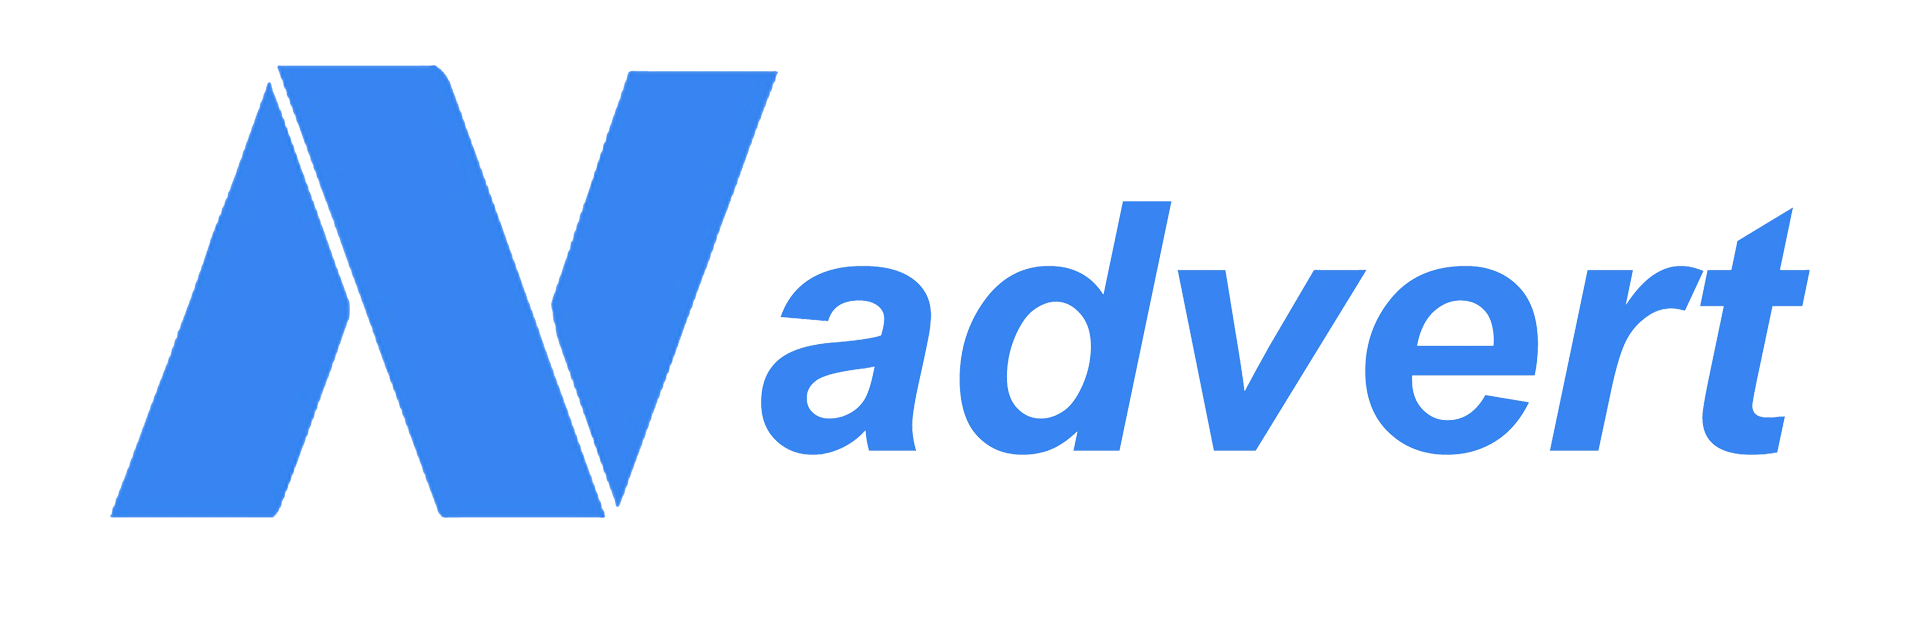 nadvert logo newsagent advertising